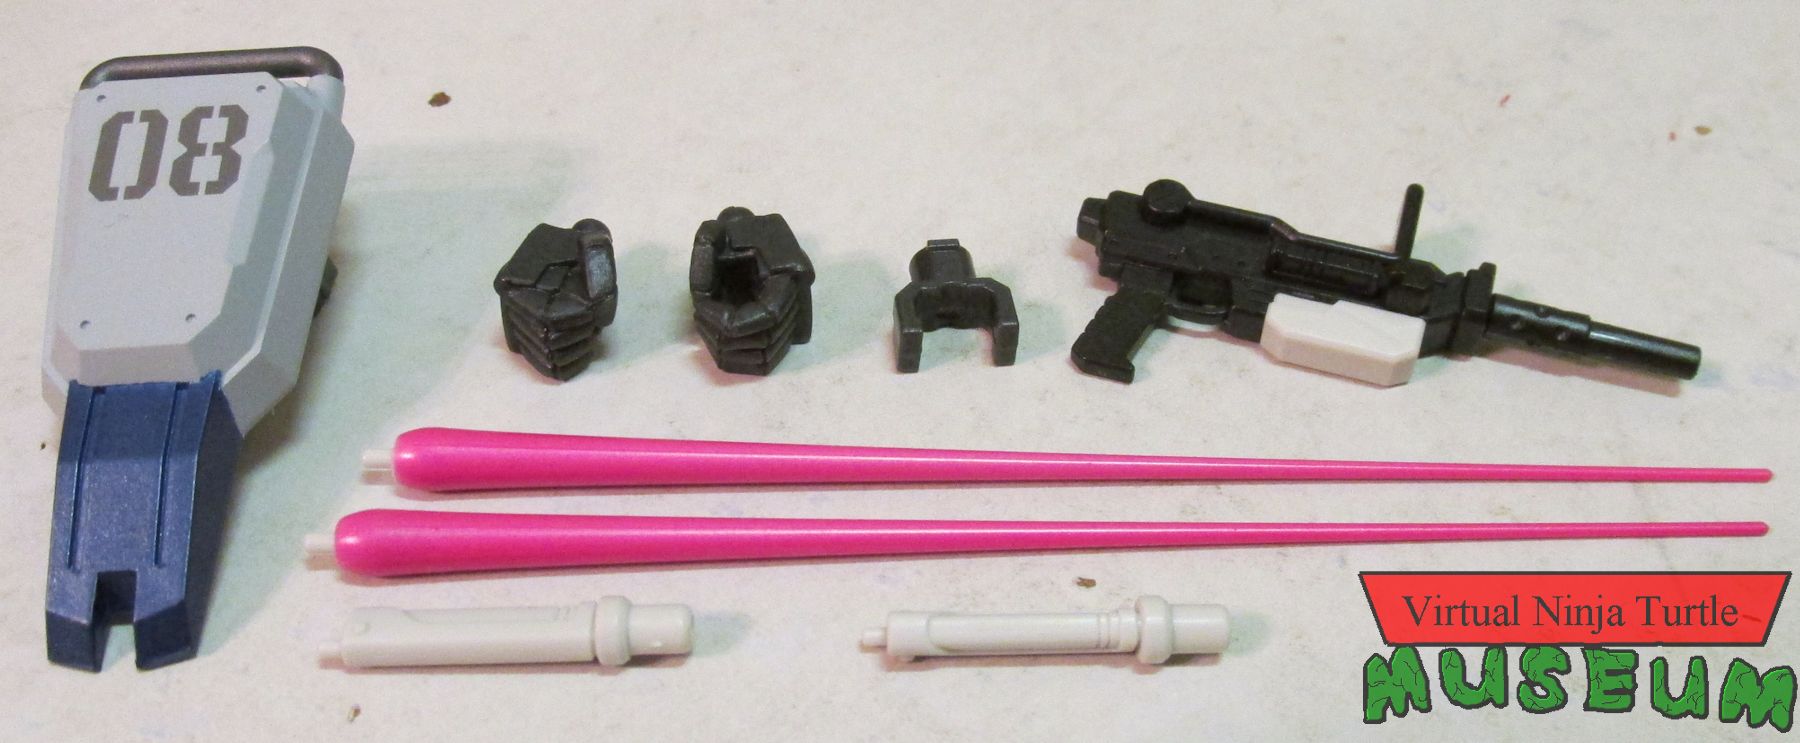 Gundam EZ accessories